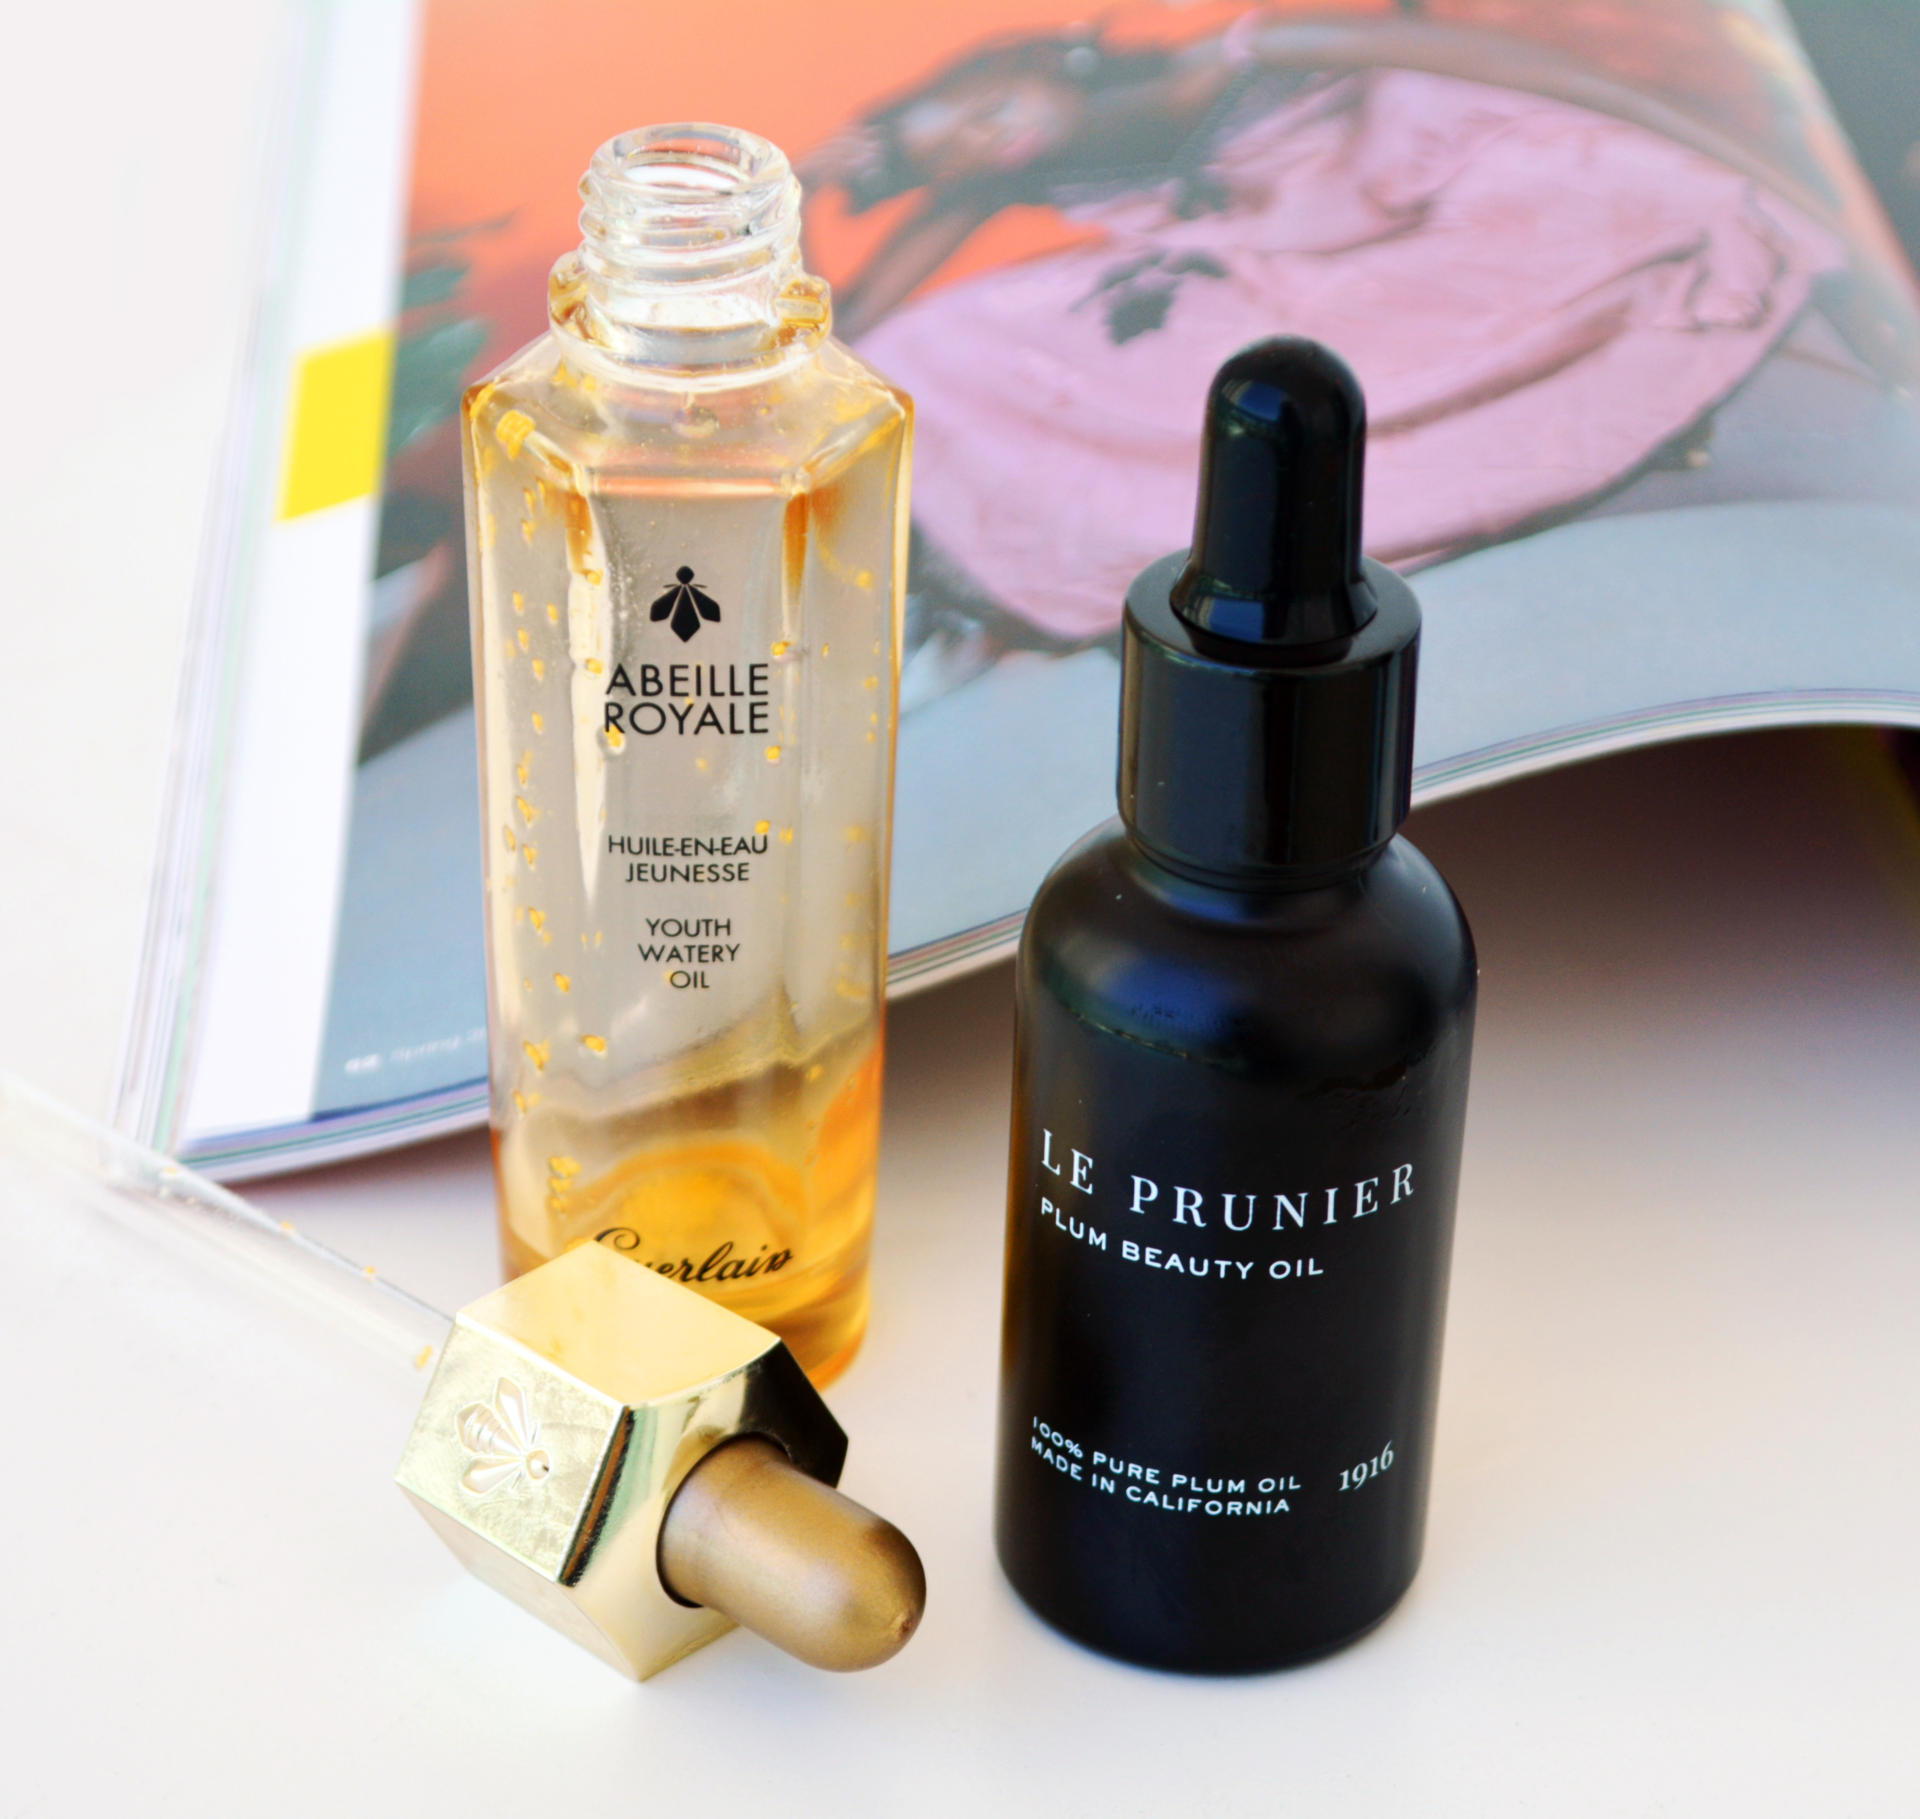 Le Prunier Plum Beauty Oil, Guerlain Abeille Royale Youth Watery Oil